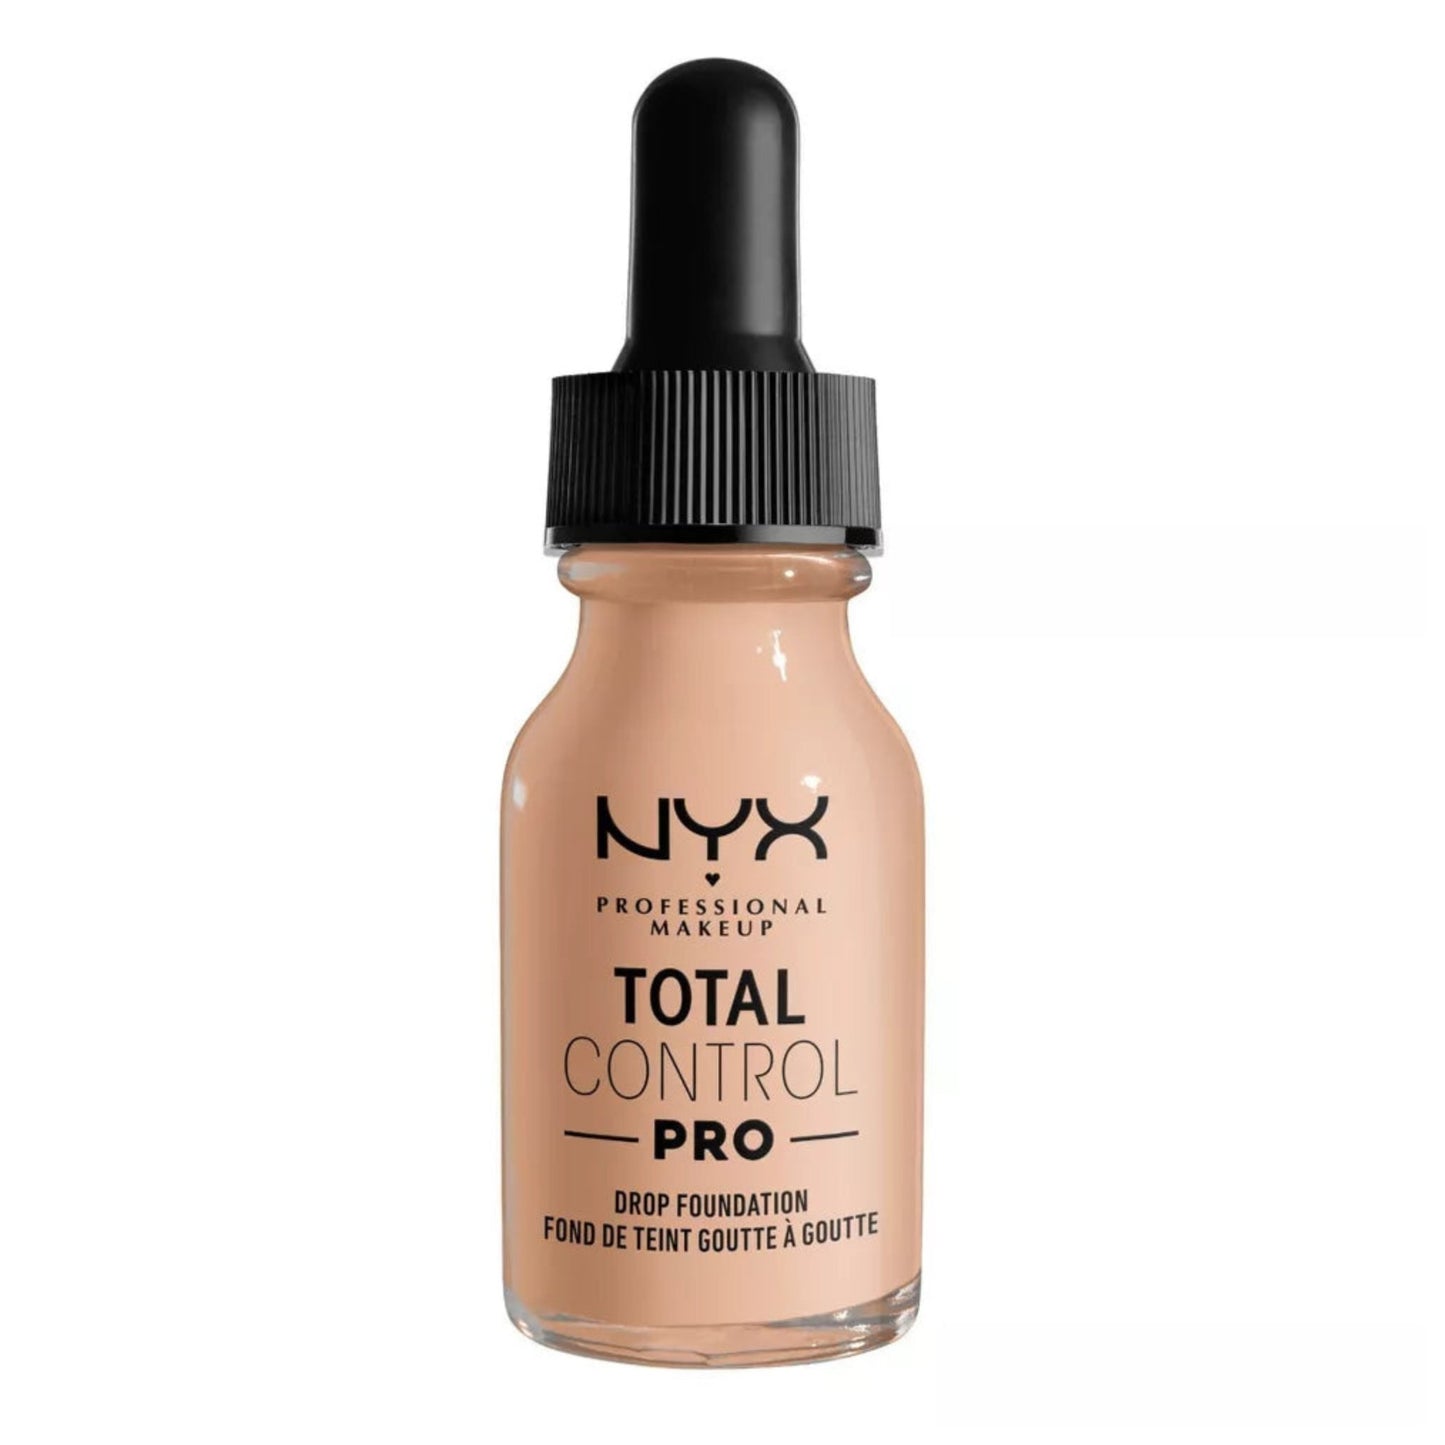 NYX Professional Makeup Total Control Pro Drop Foundation Skin-true buildable Coverage - 0.43 fl oz